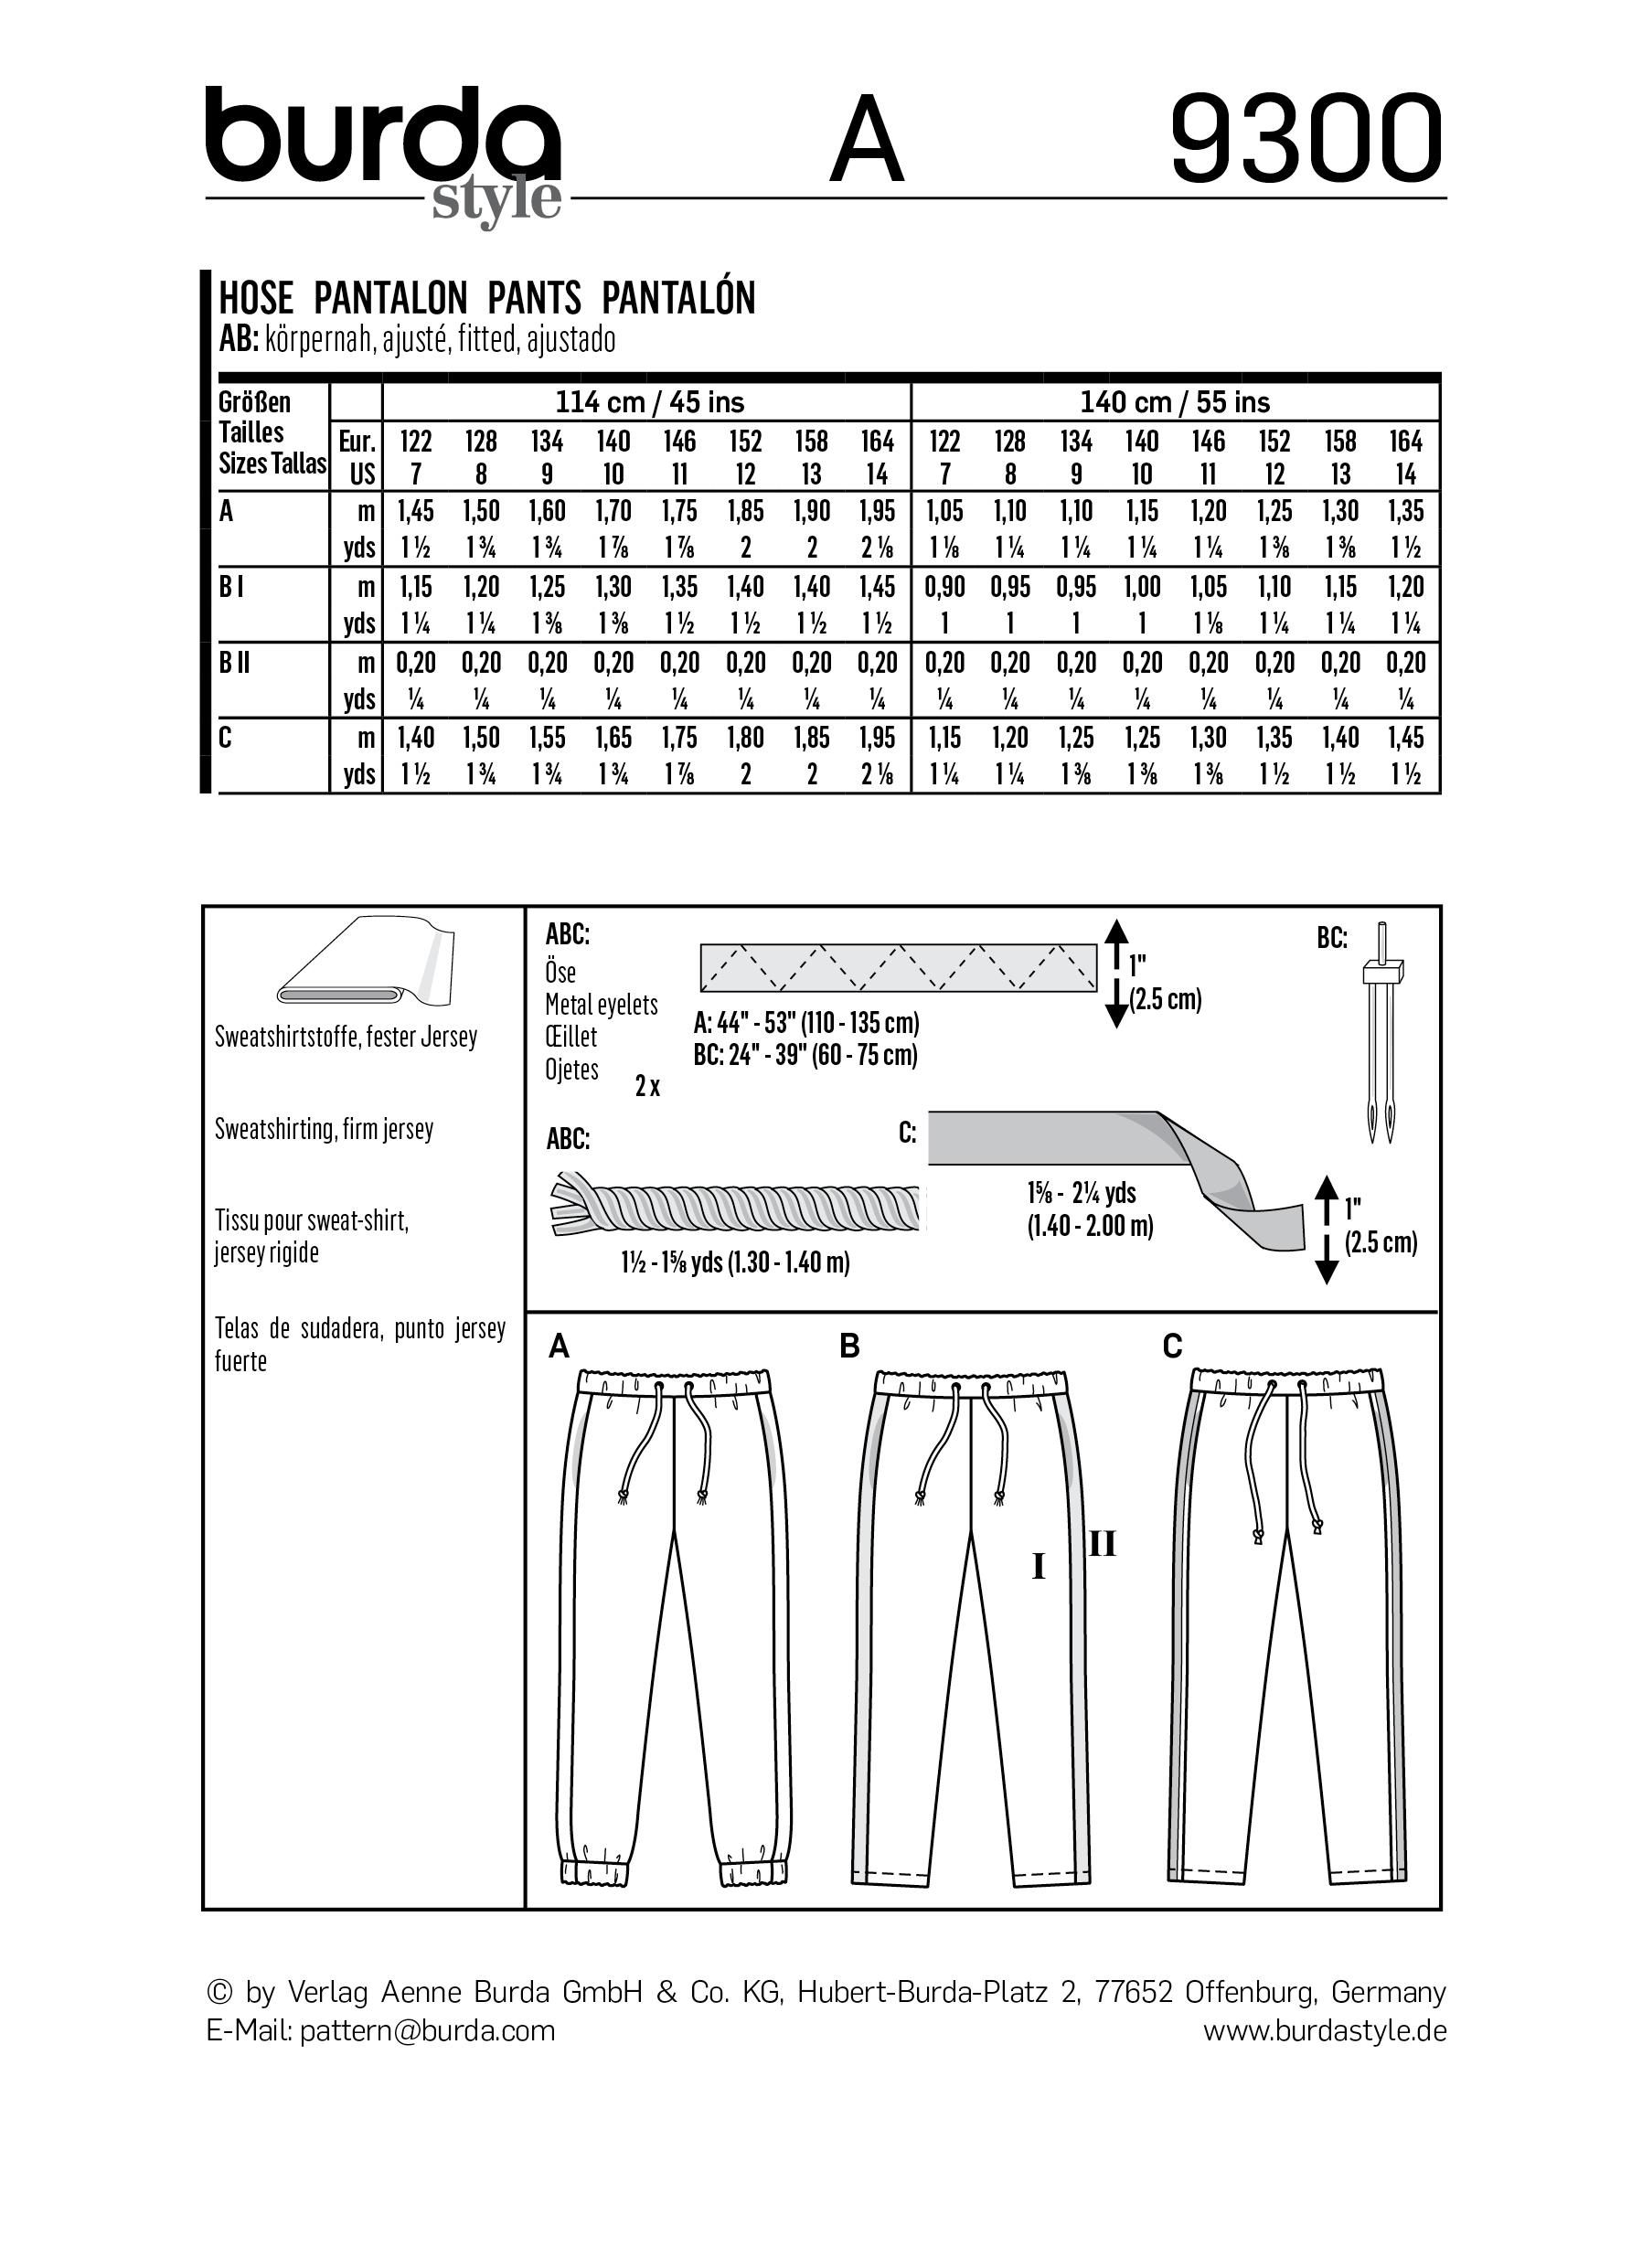 Burda B9300 Jogging Pants Sewing Pattern